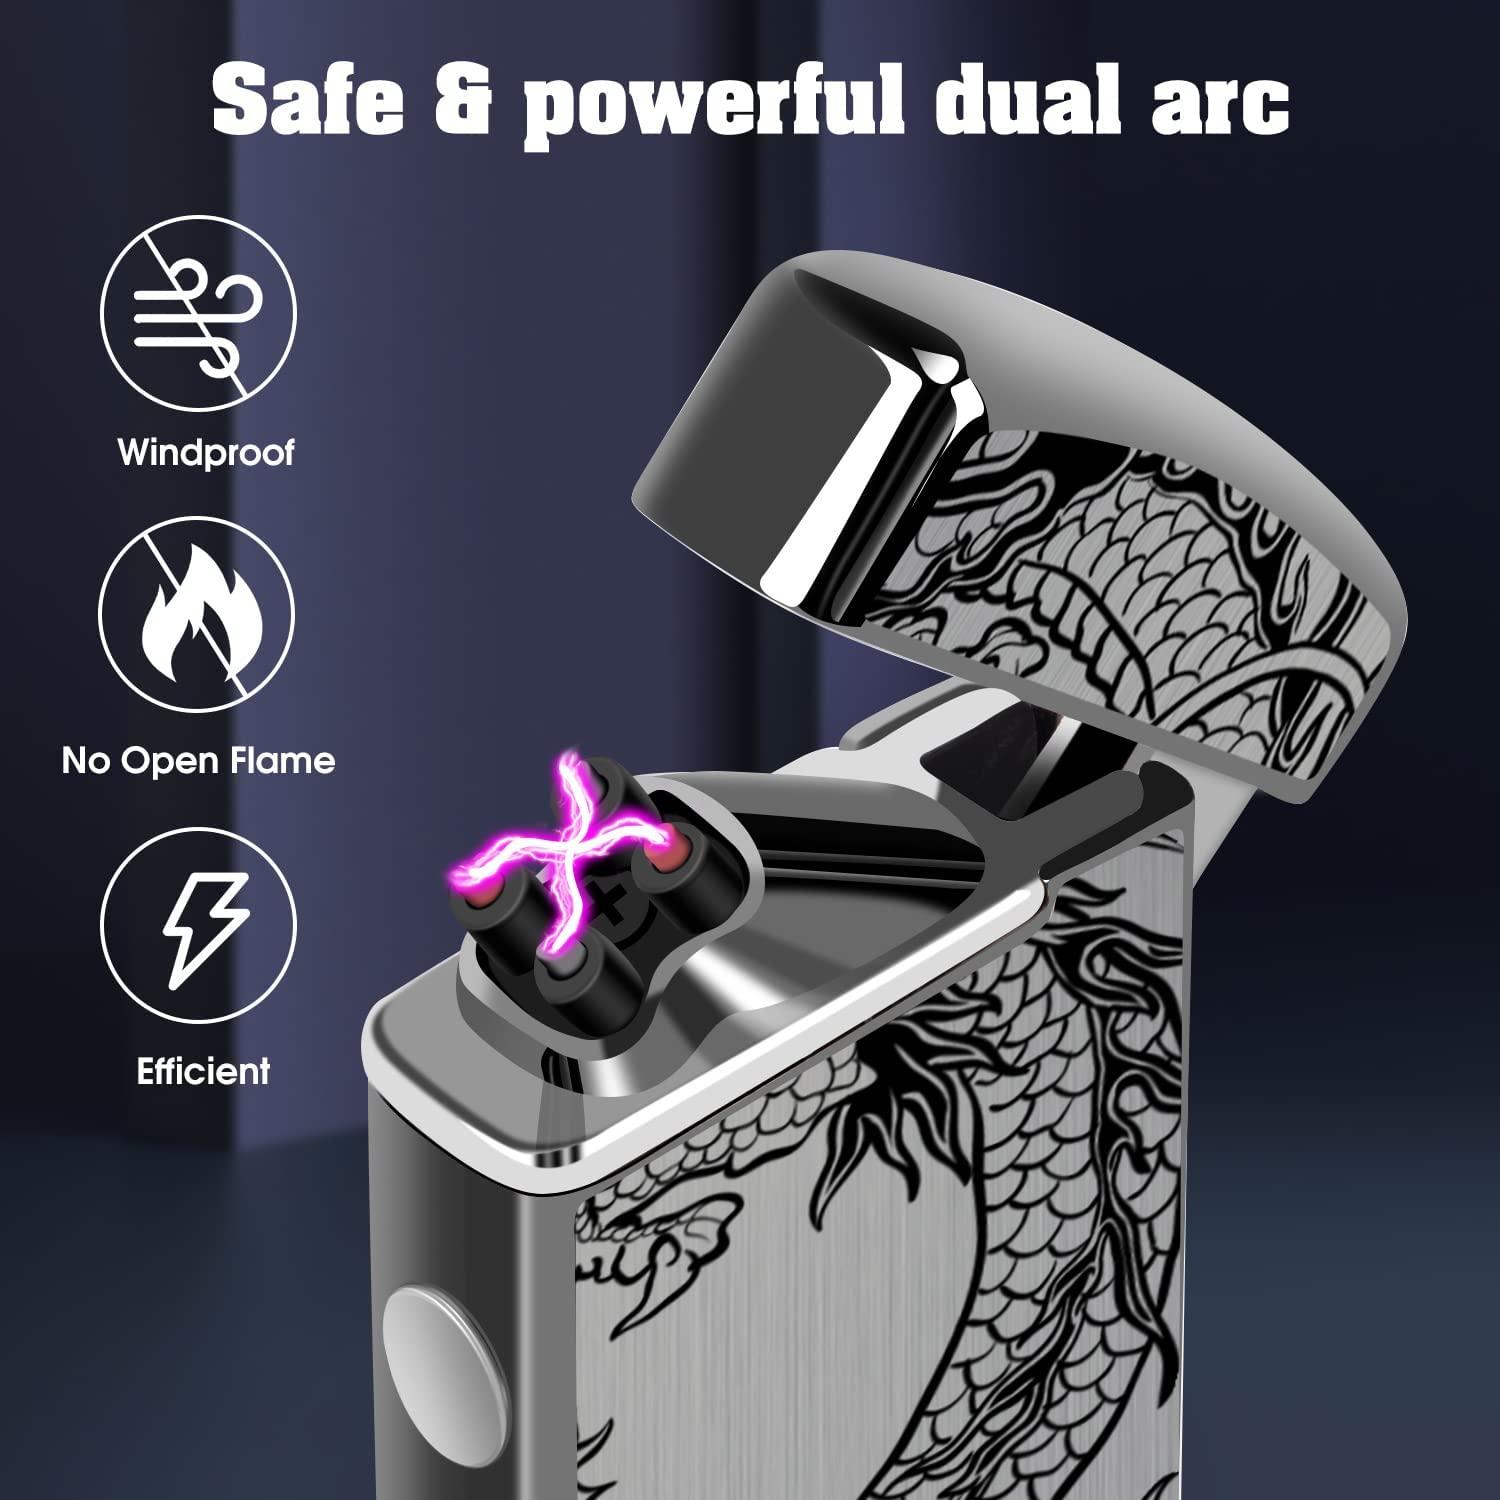 Display Power Windproof Arc Lighter X Plasma Lighters Rechargeable